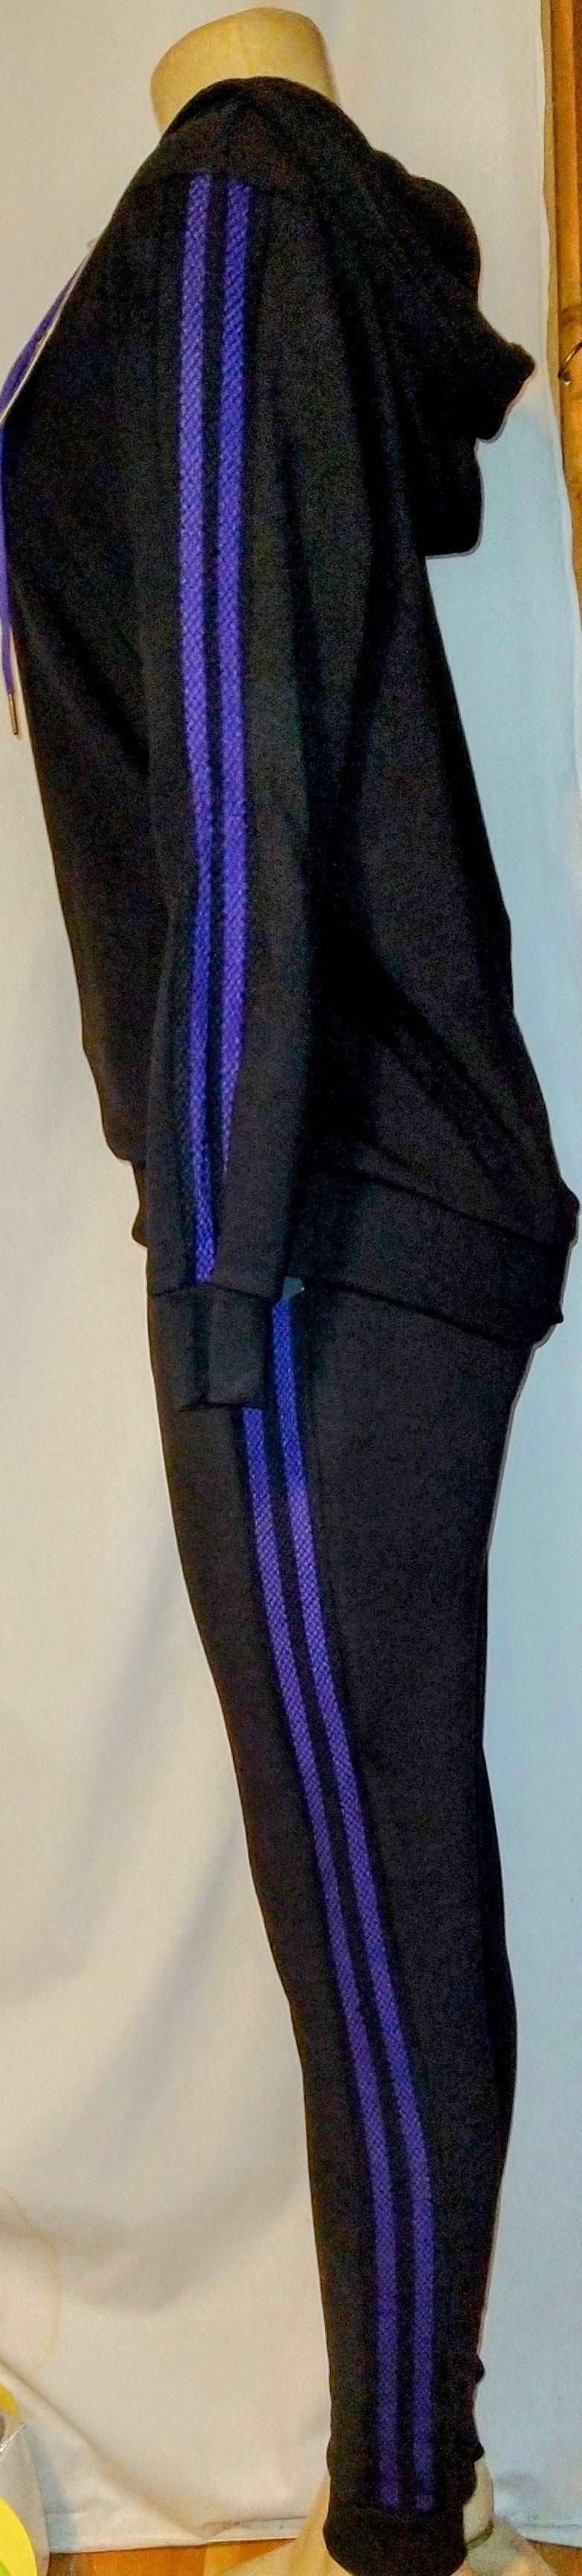 Black/purple mesh sweatsuit - The Fix Clothing